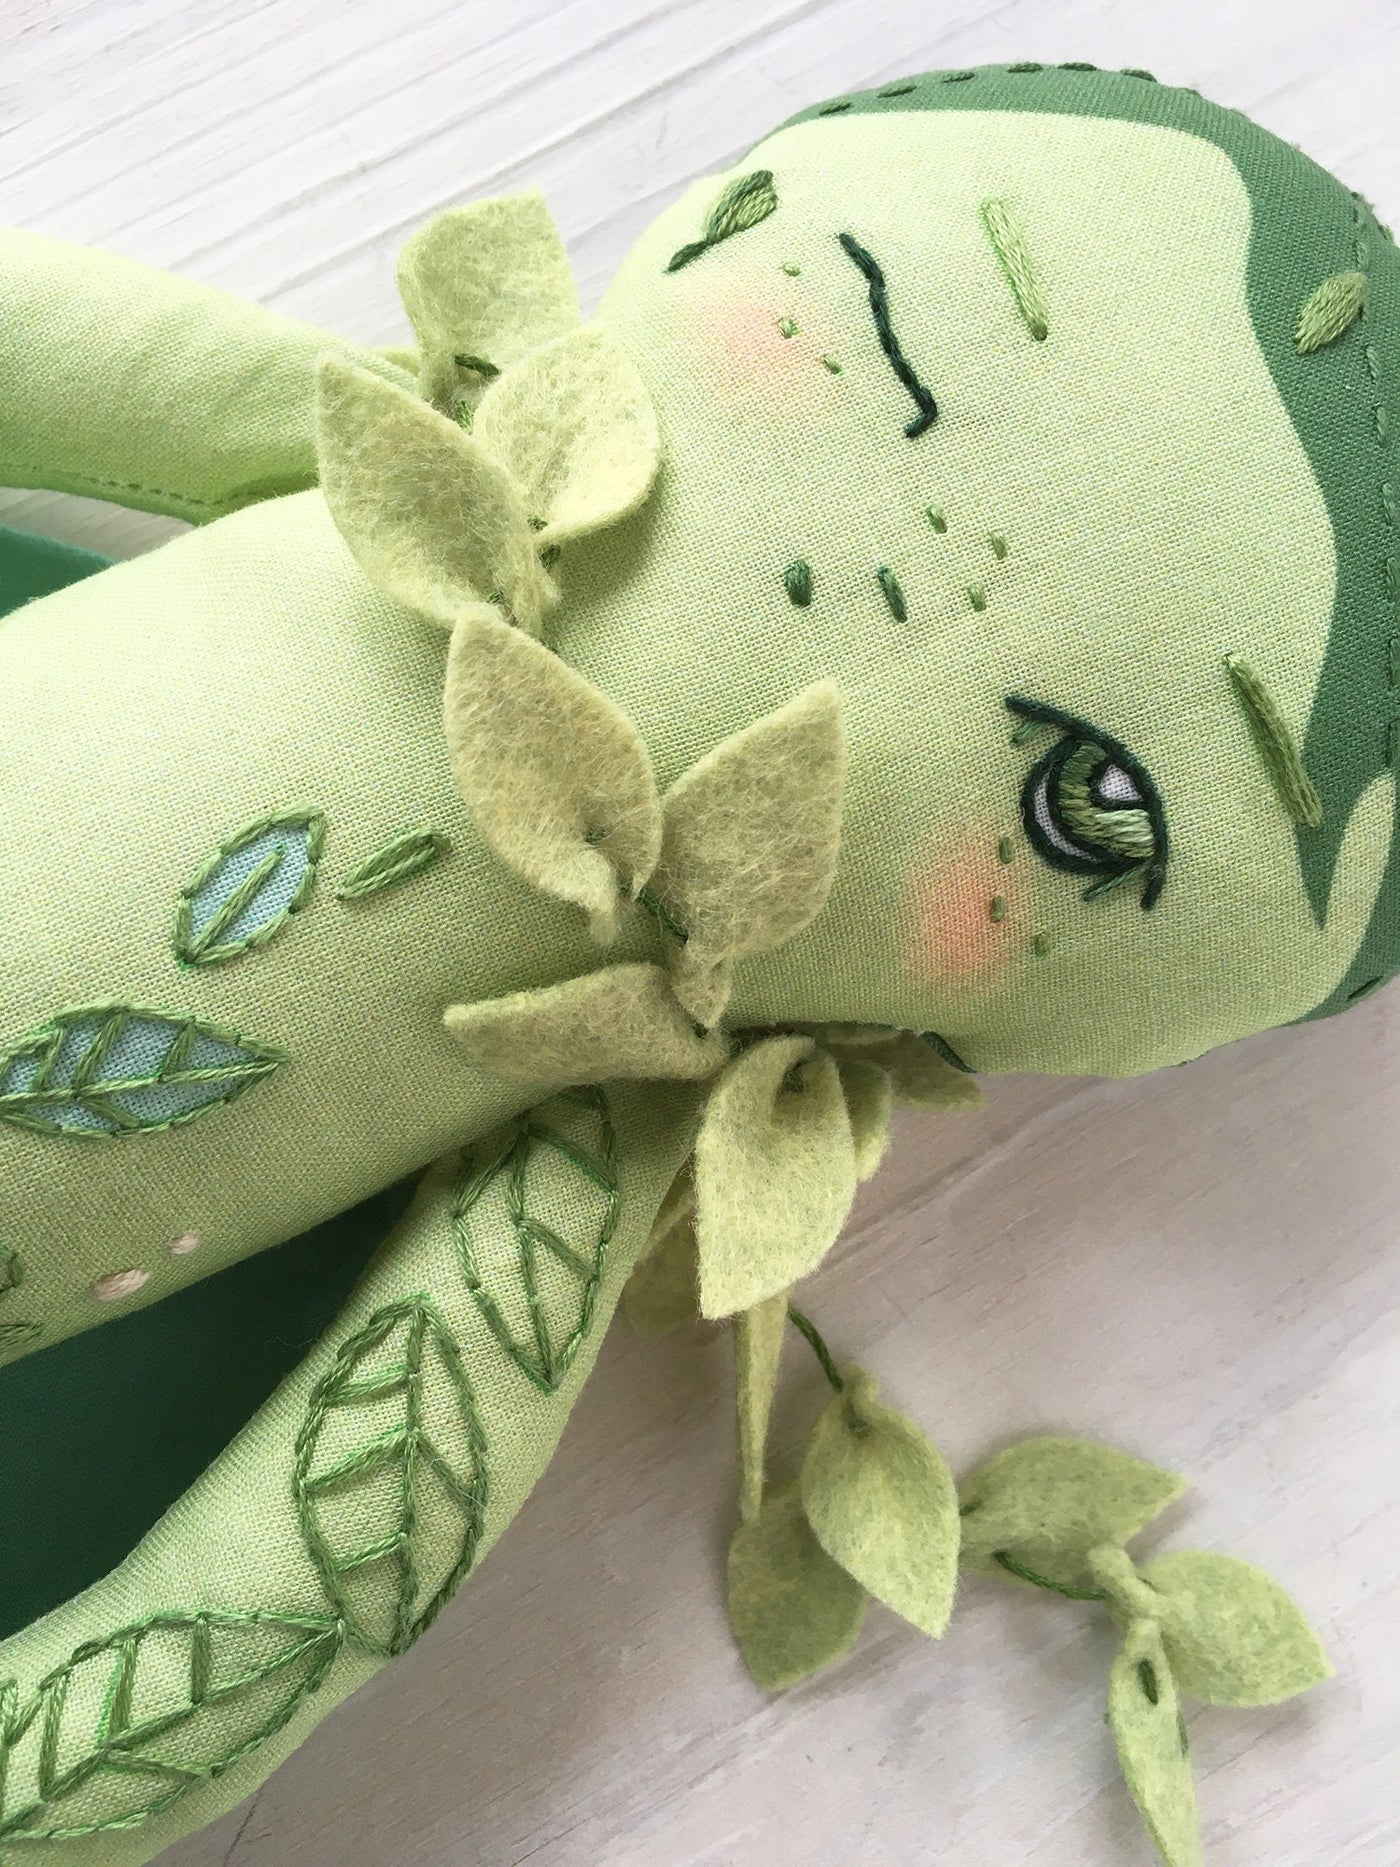 DIY Cut and Sew Fern the Leaf Faery cloth doll with embroidery